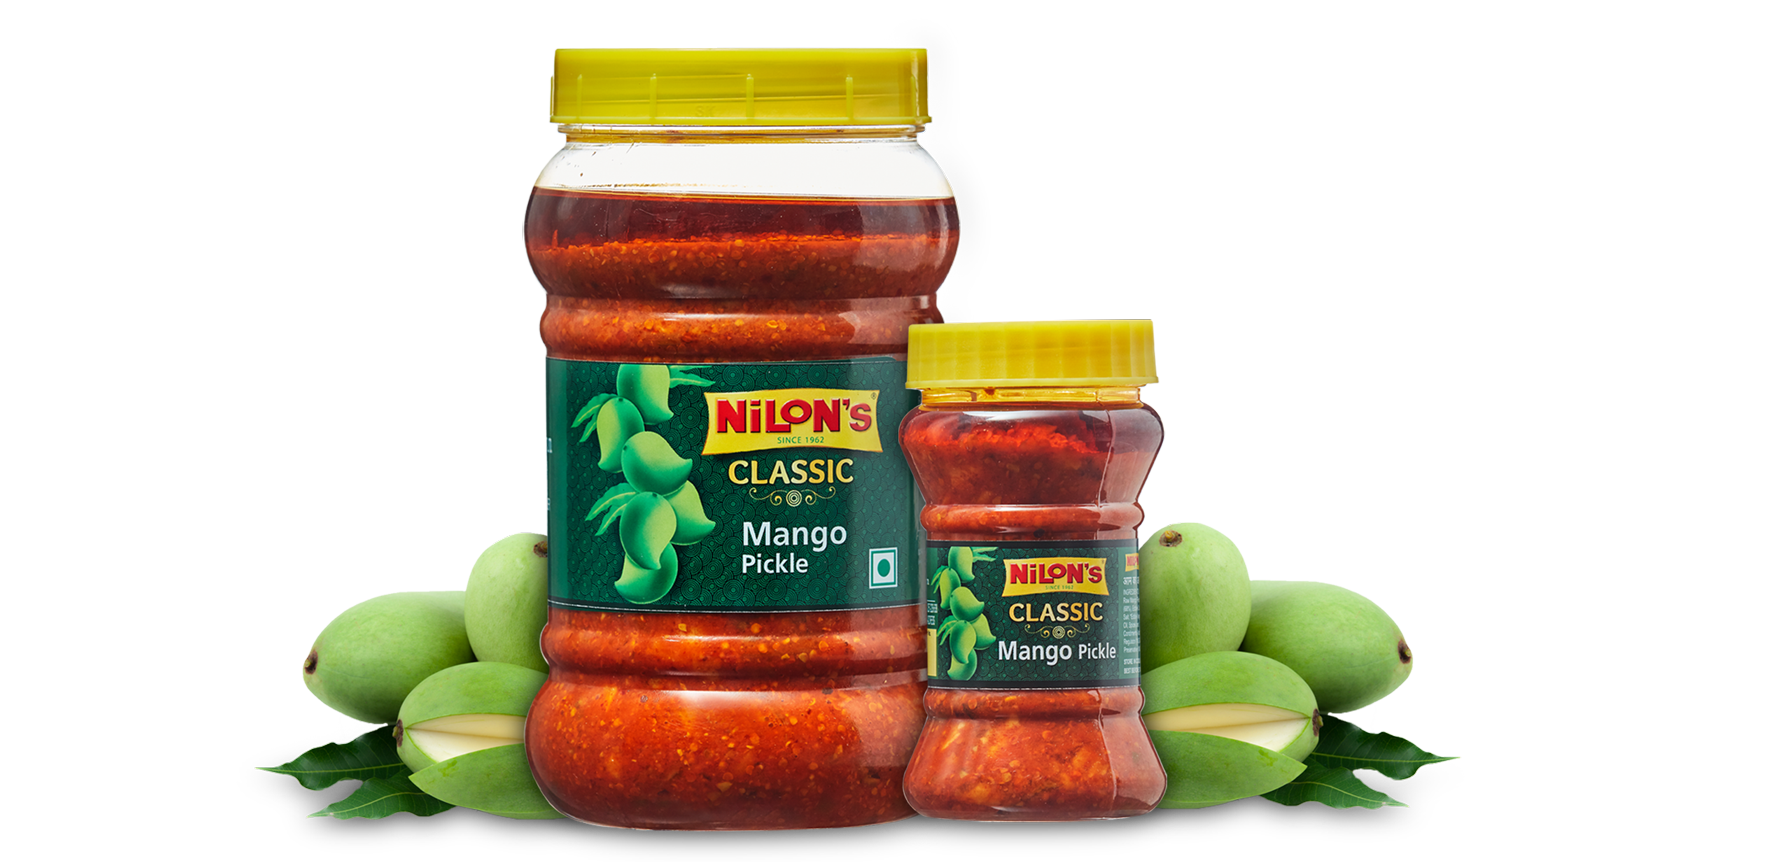 Mango Pickle (Nilons) 500g.??